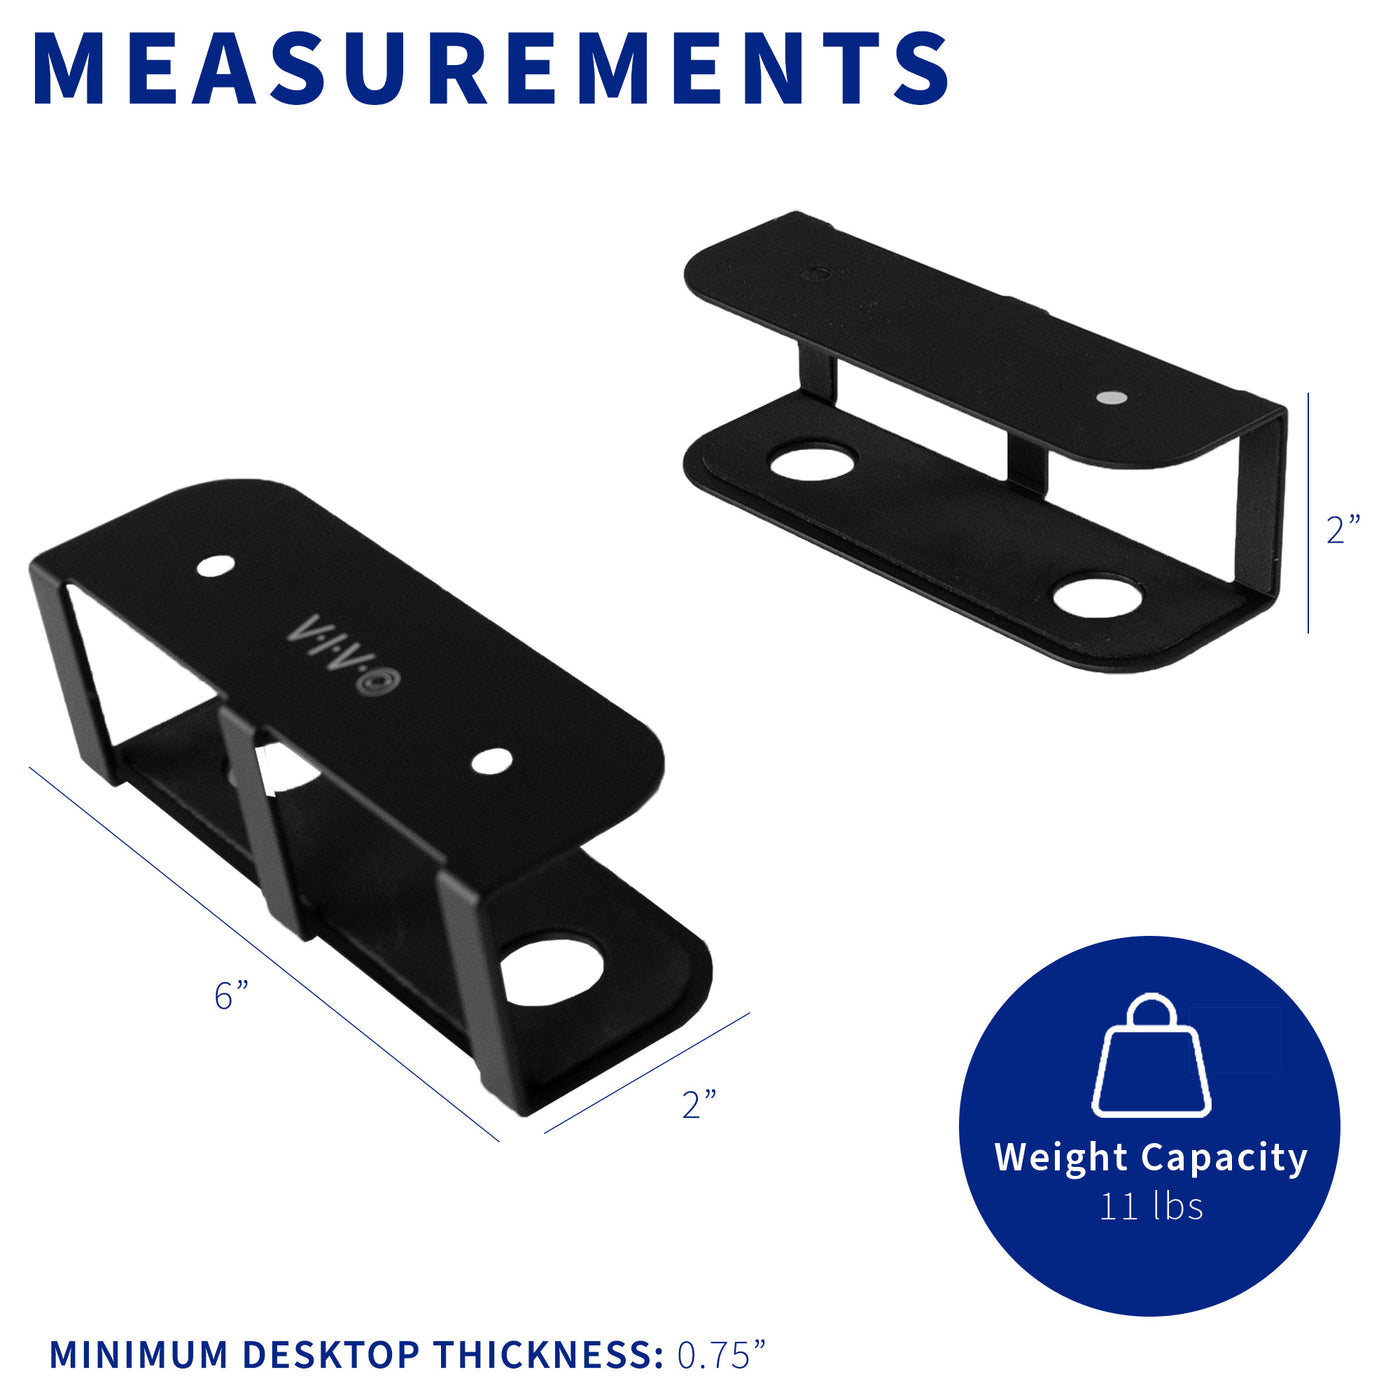 Measurements and compatibility of under-desk laptop mount.